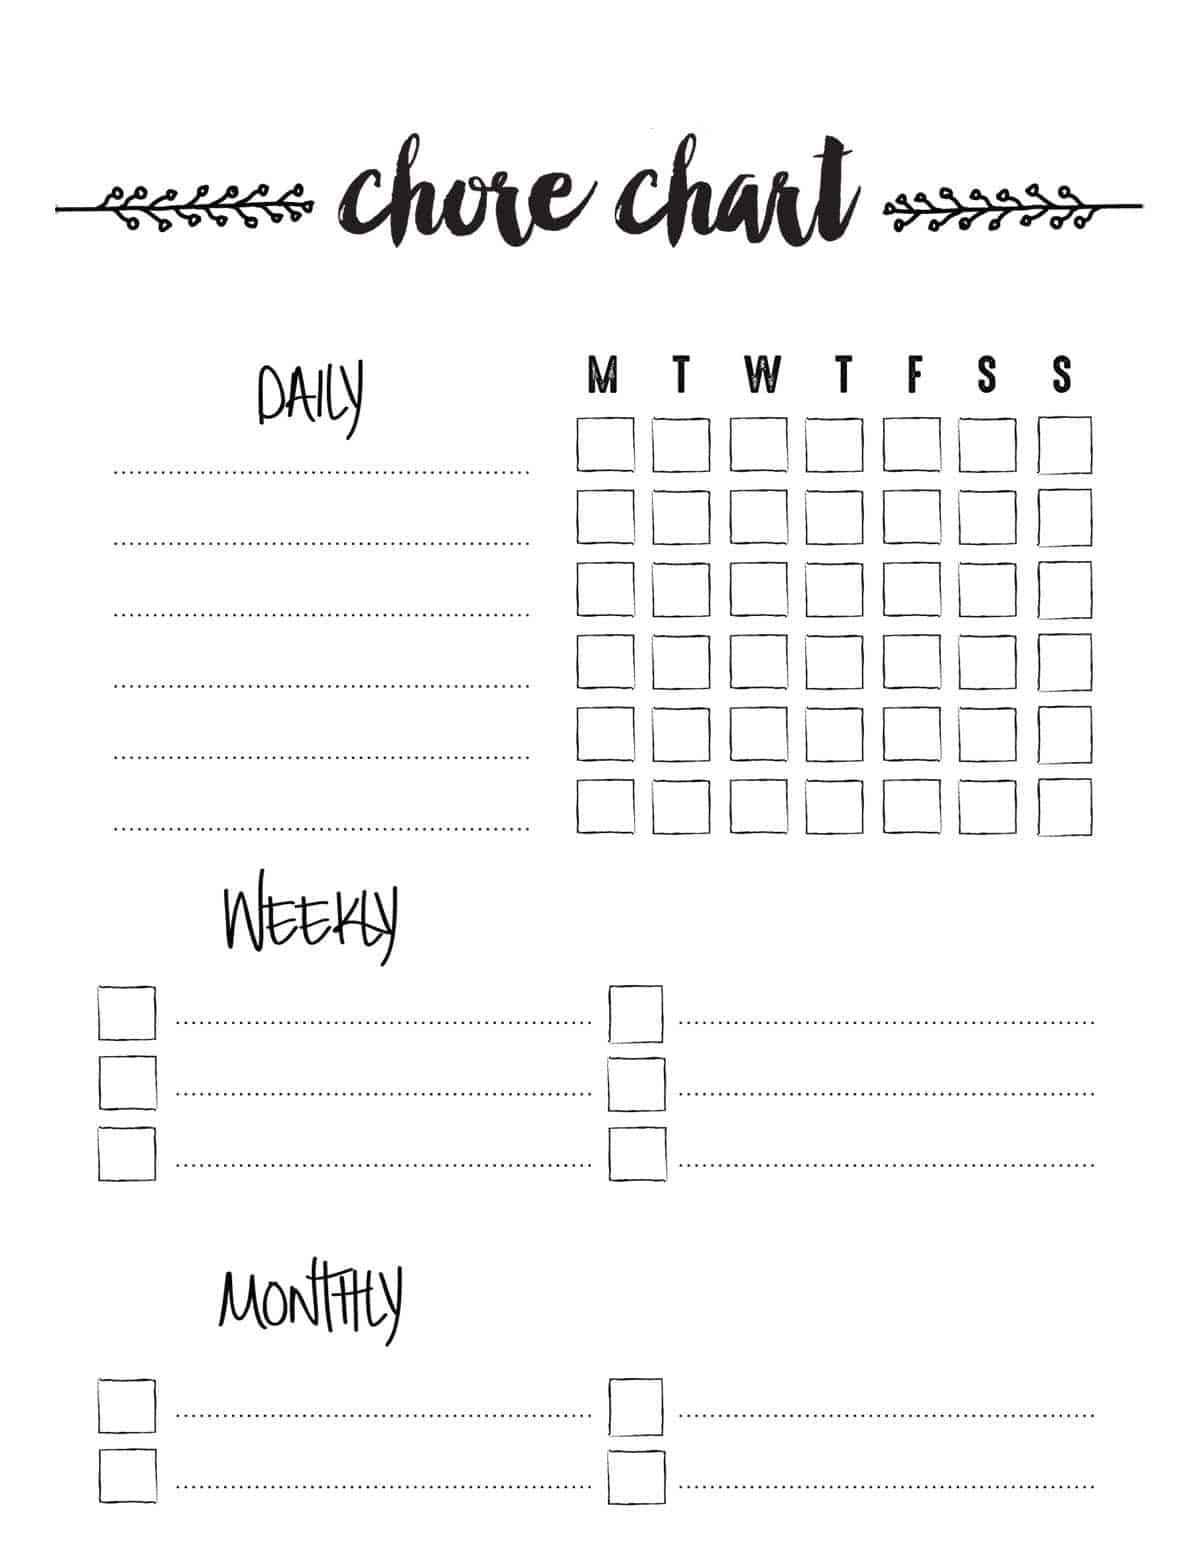 Chore Chart To Build Self Esteem Free Printable Skip To My Lou - Free Printable Chore List